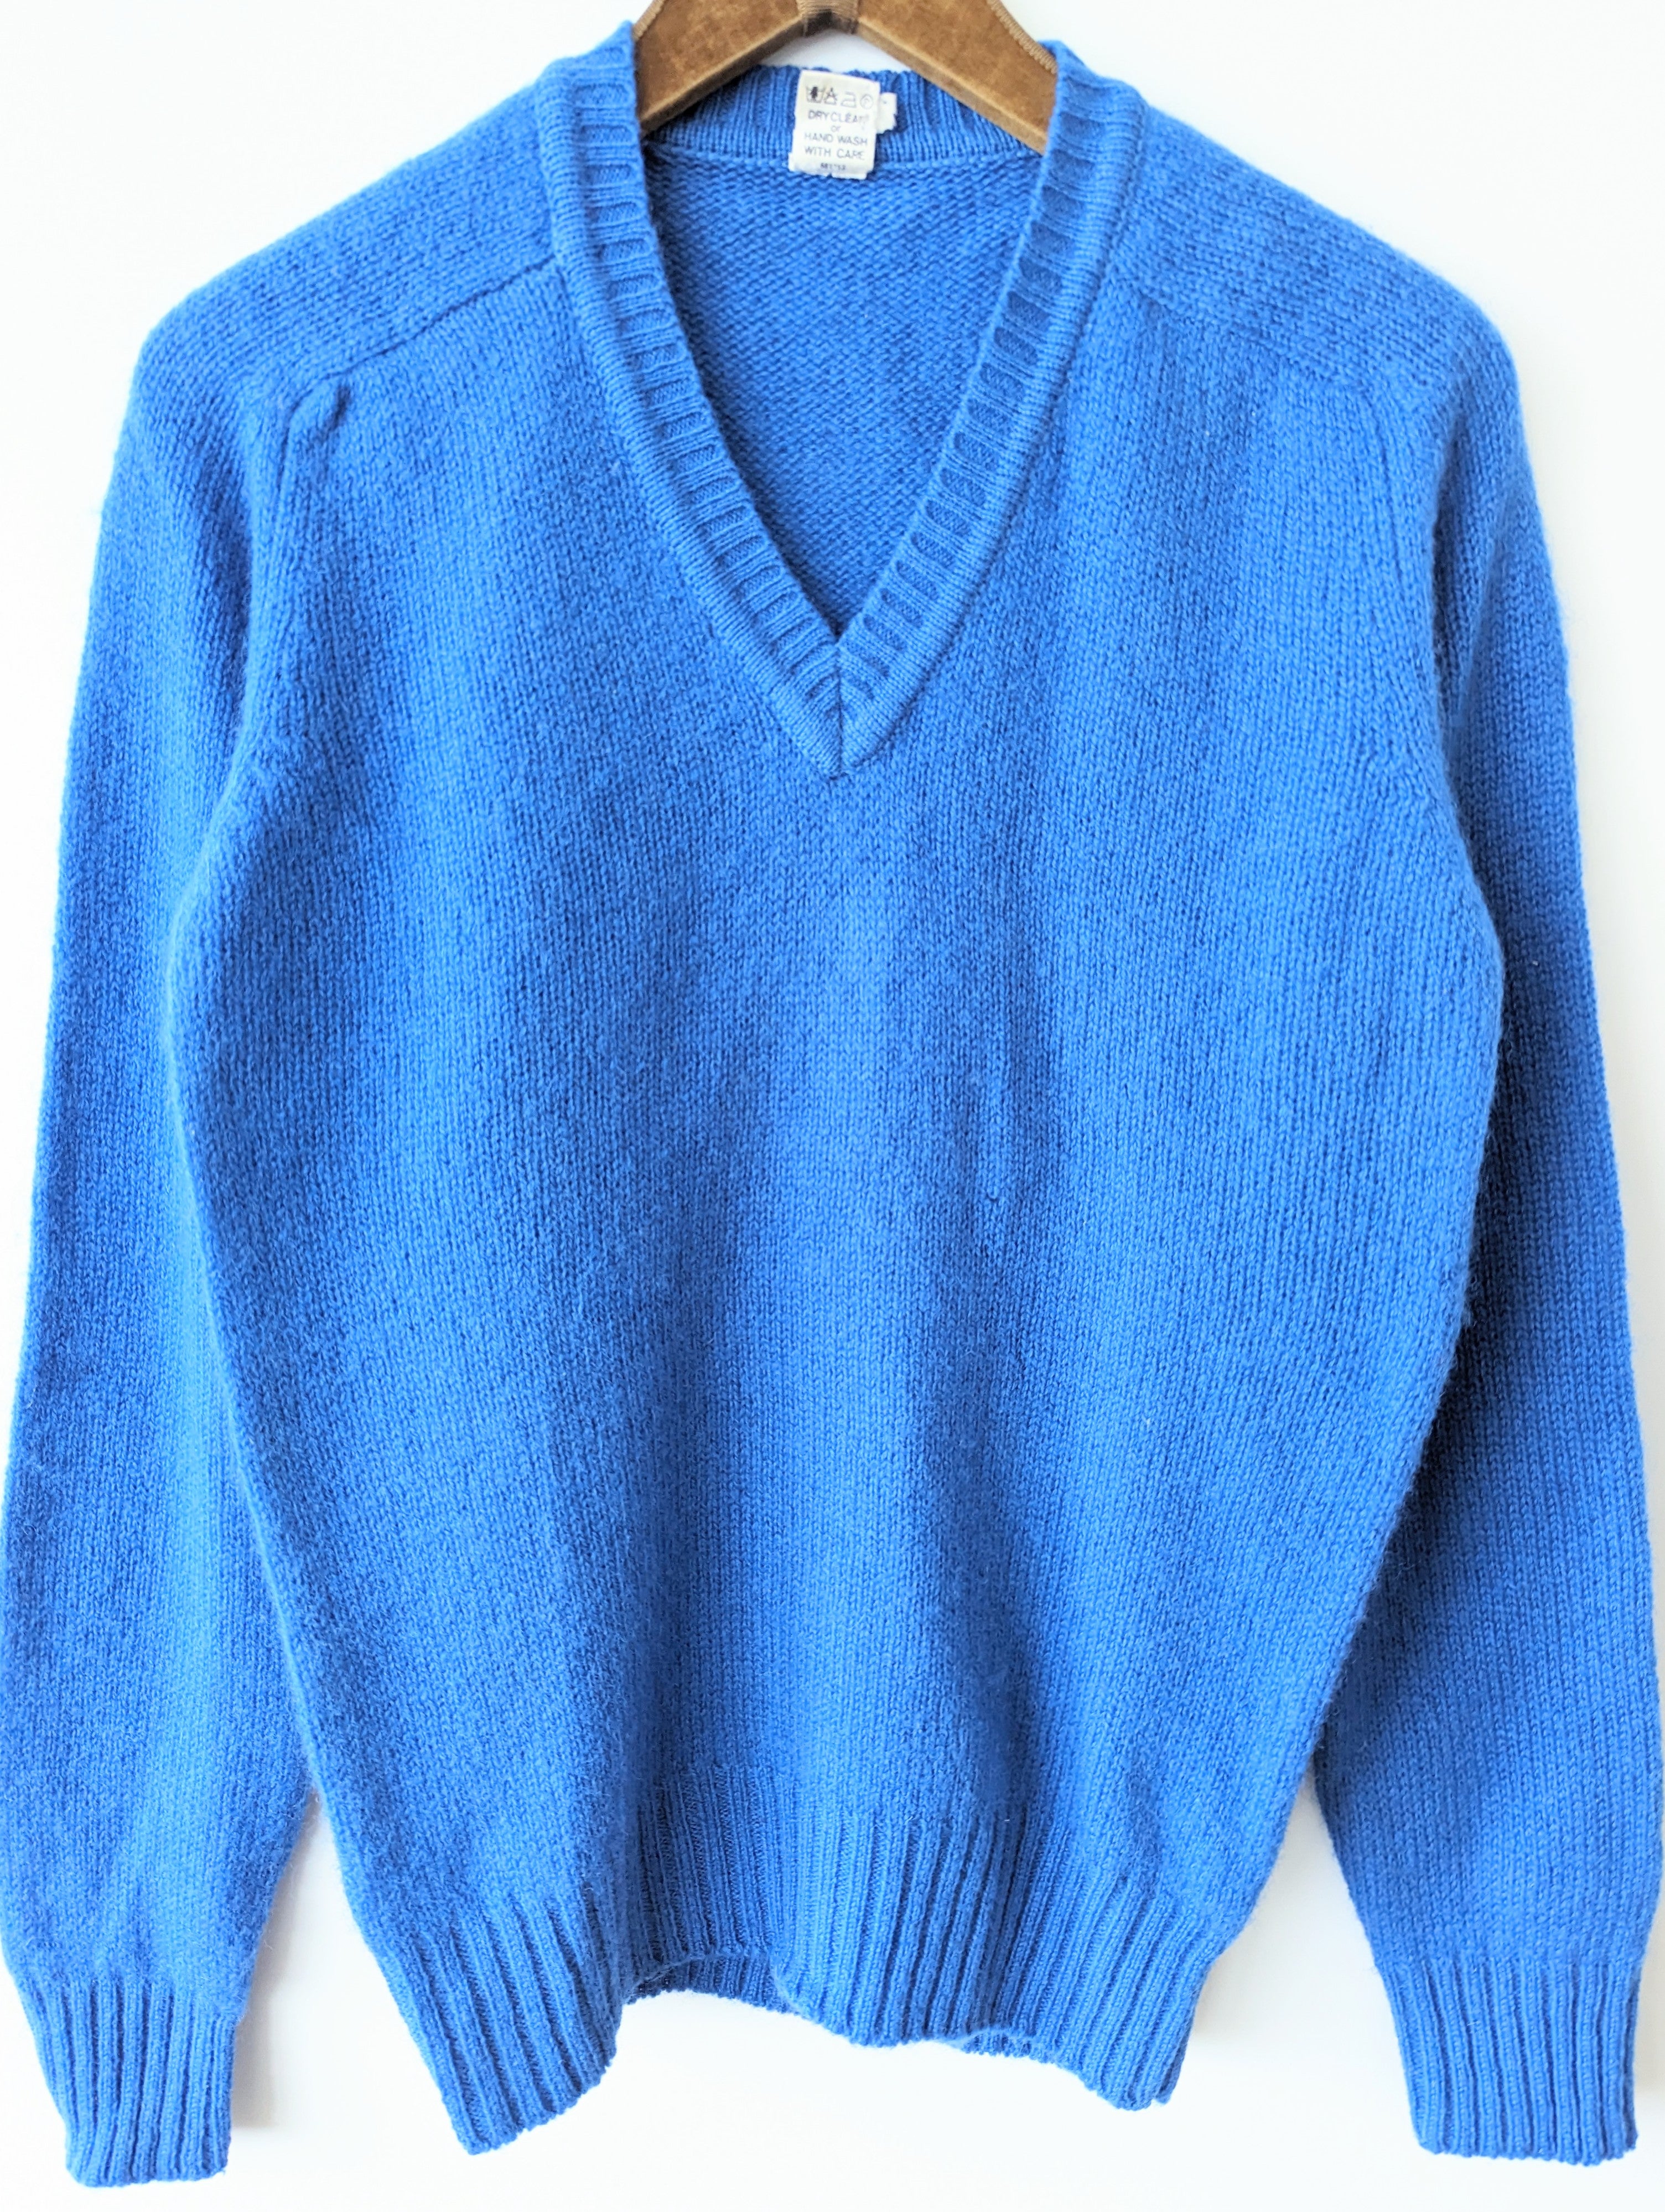 *Wolle* Pullover Premium Basic Royalblau Heavin (S-M)